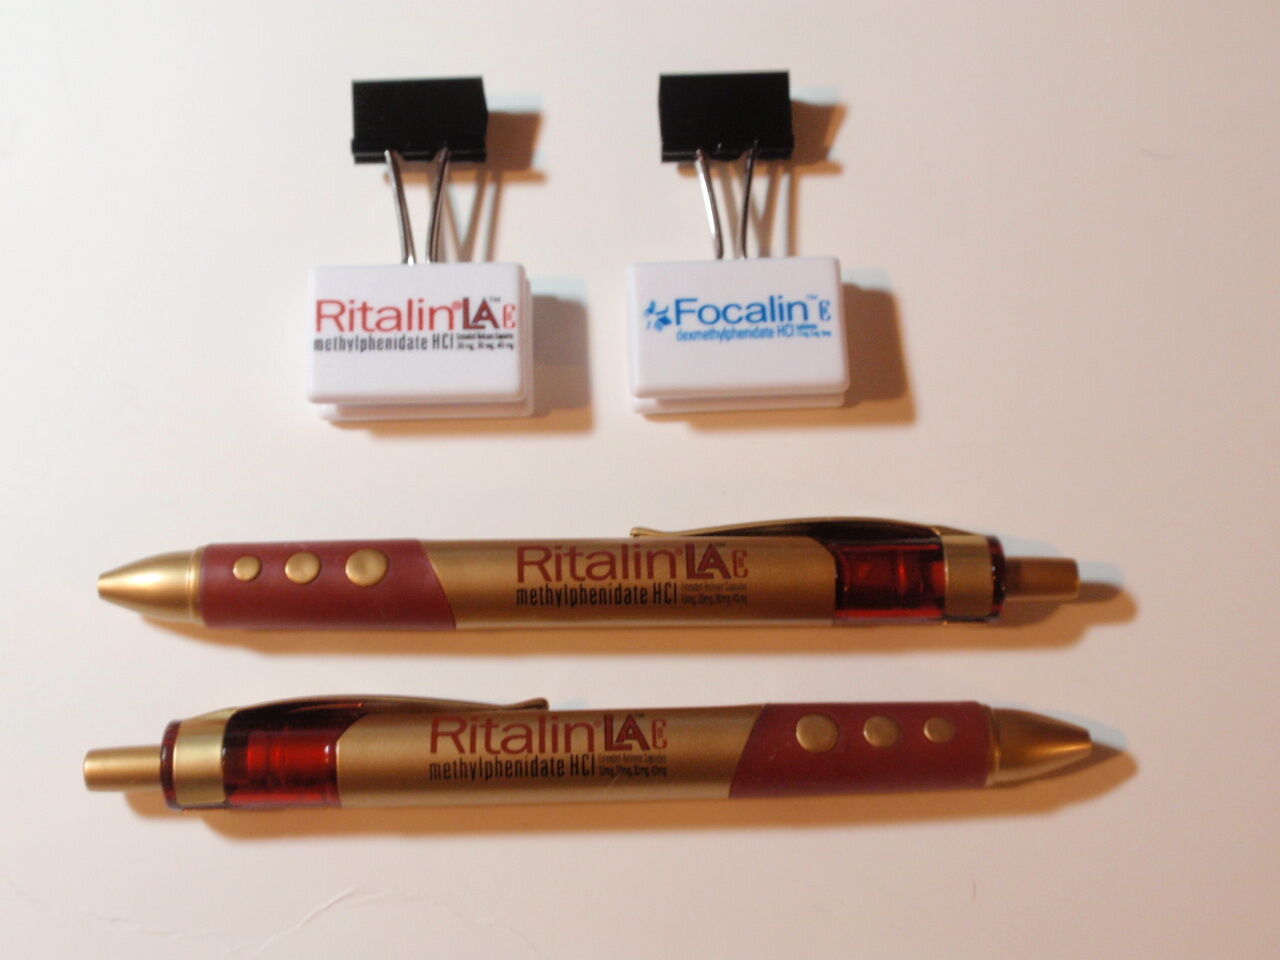  Ritalin  2  New Ritalin Pens, metal/plastic,+ 2 NEW Ritalin Clips  DRUG REP +